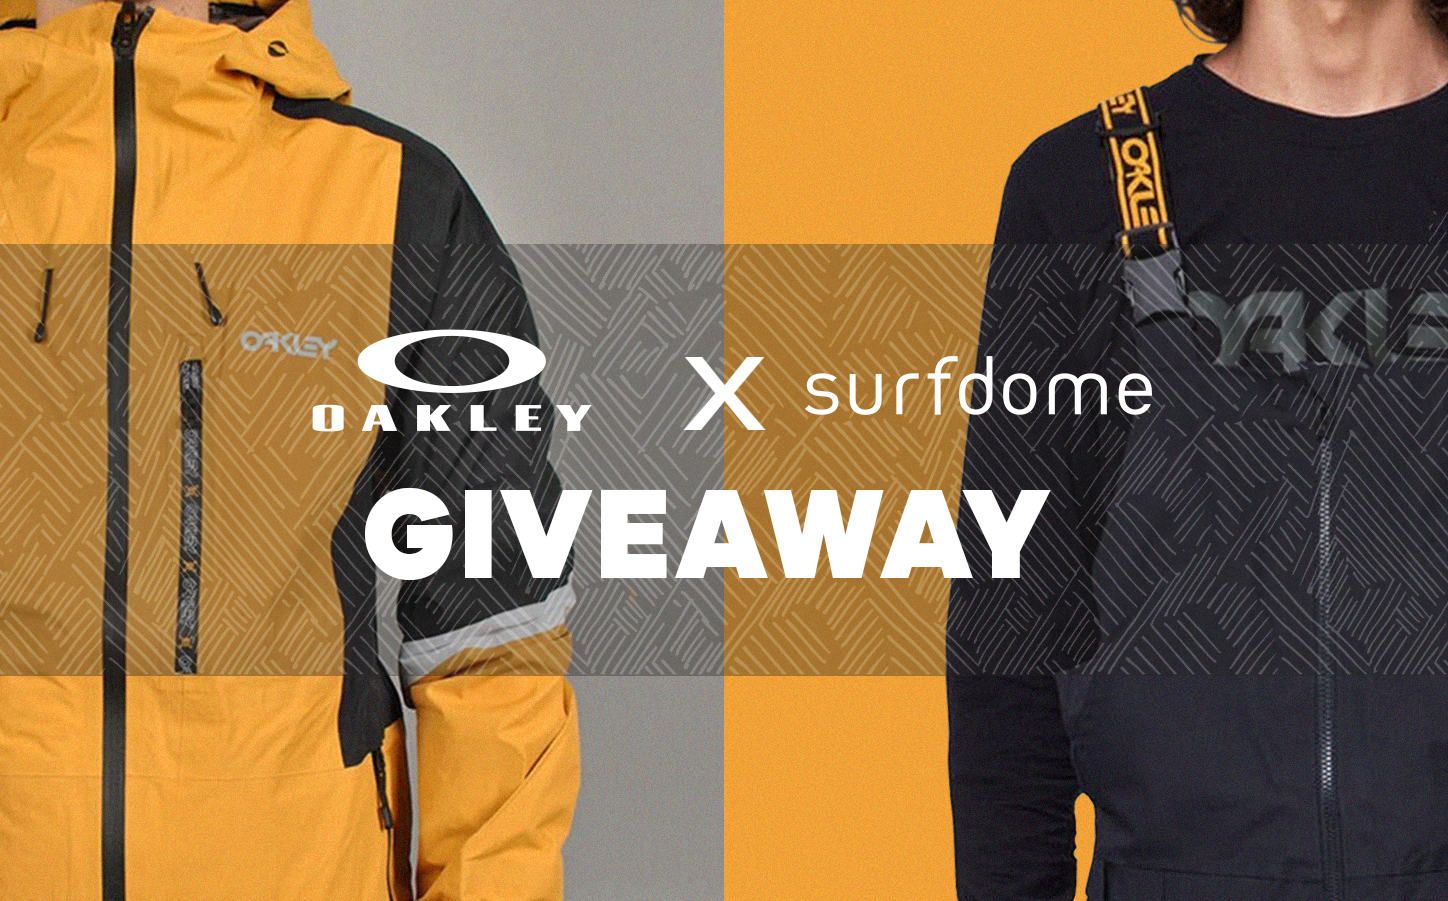 Oakley x Surfdome Giveaway - Enter now